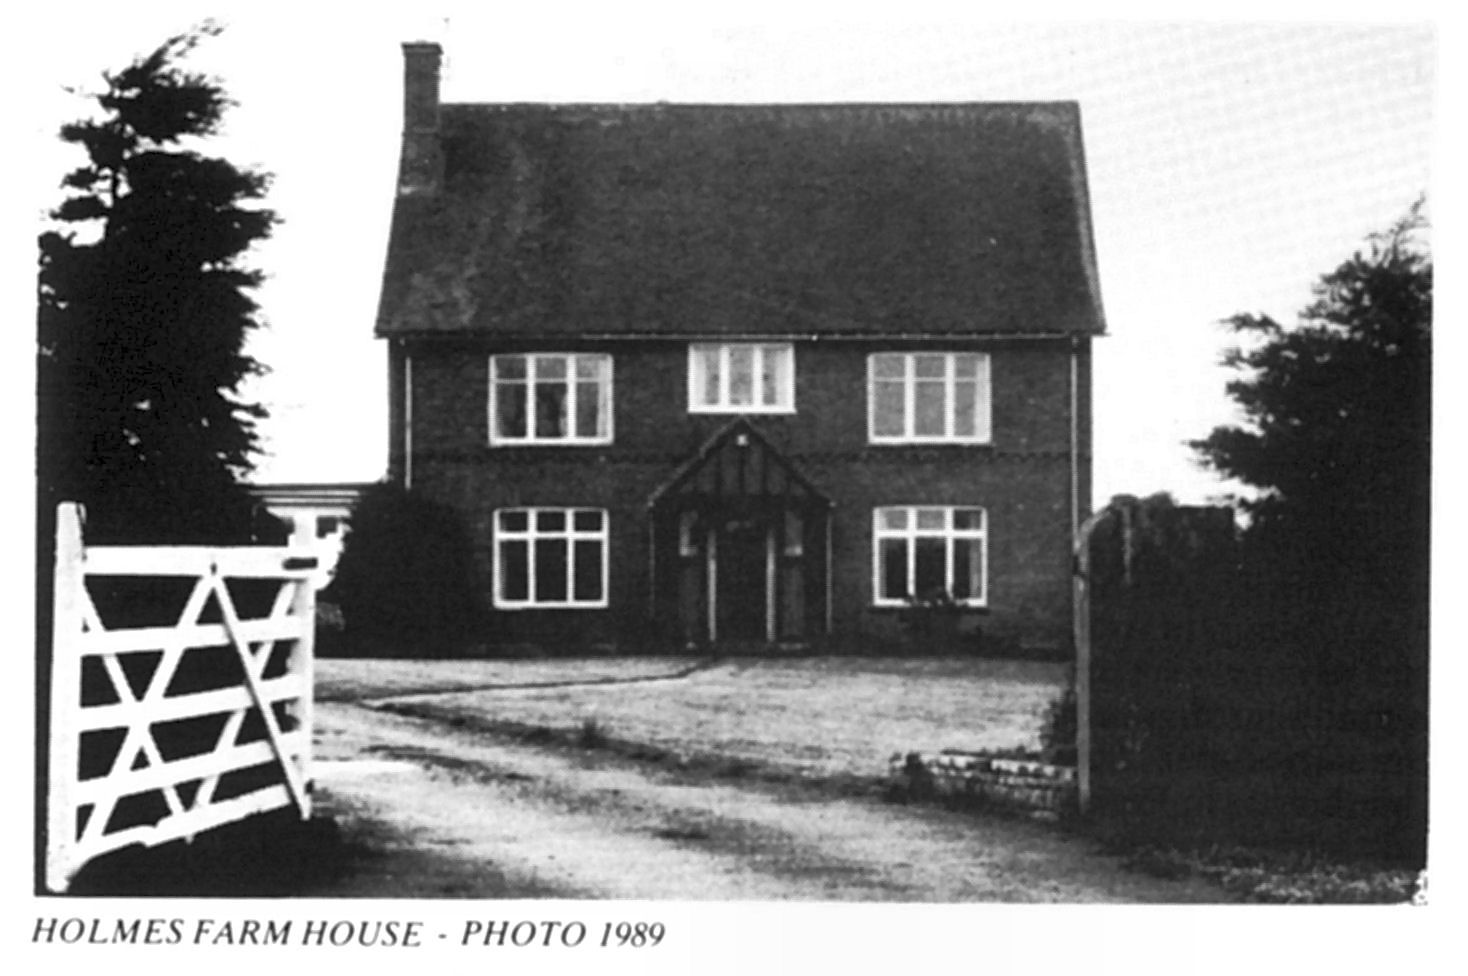 Holmes Farm House (Photo 1989)